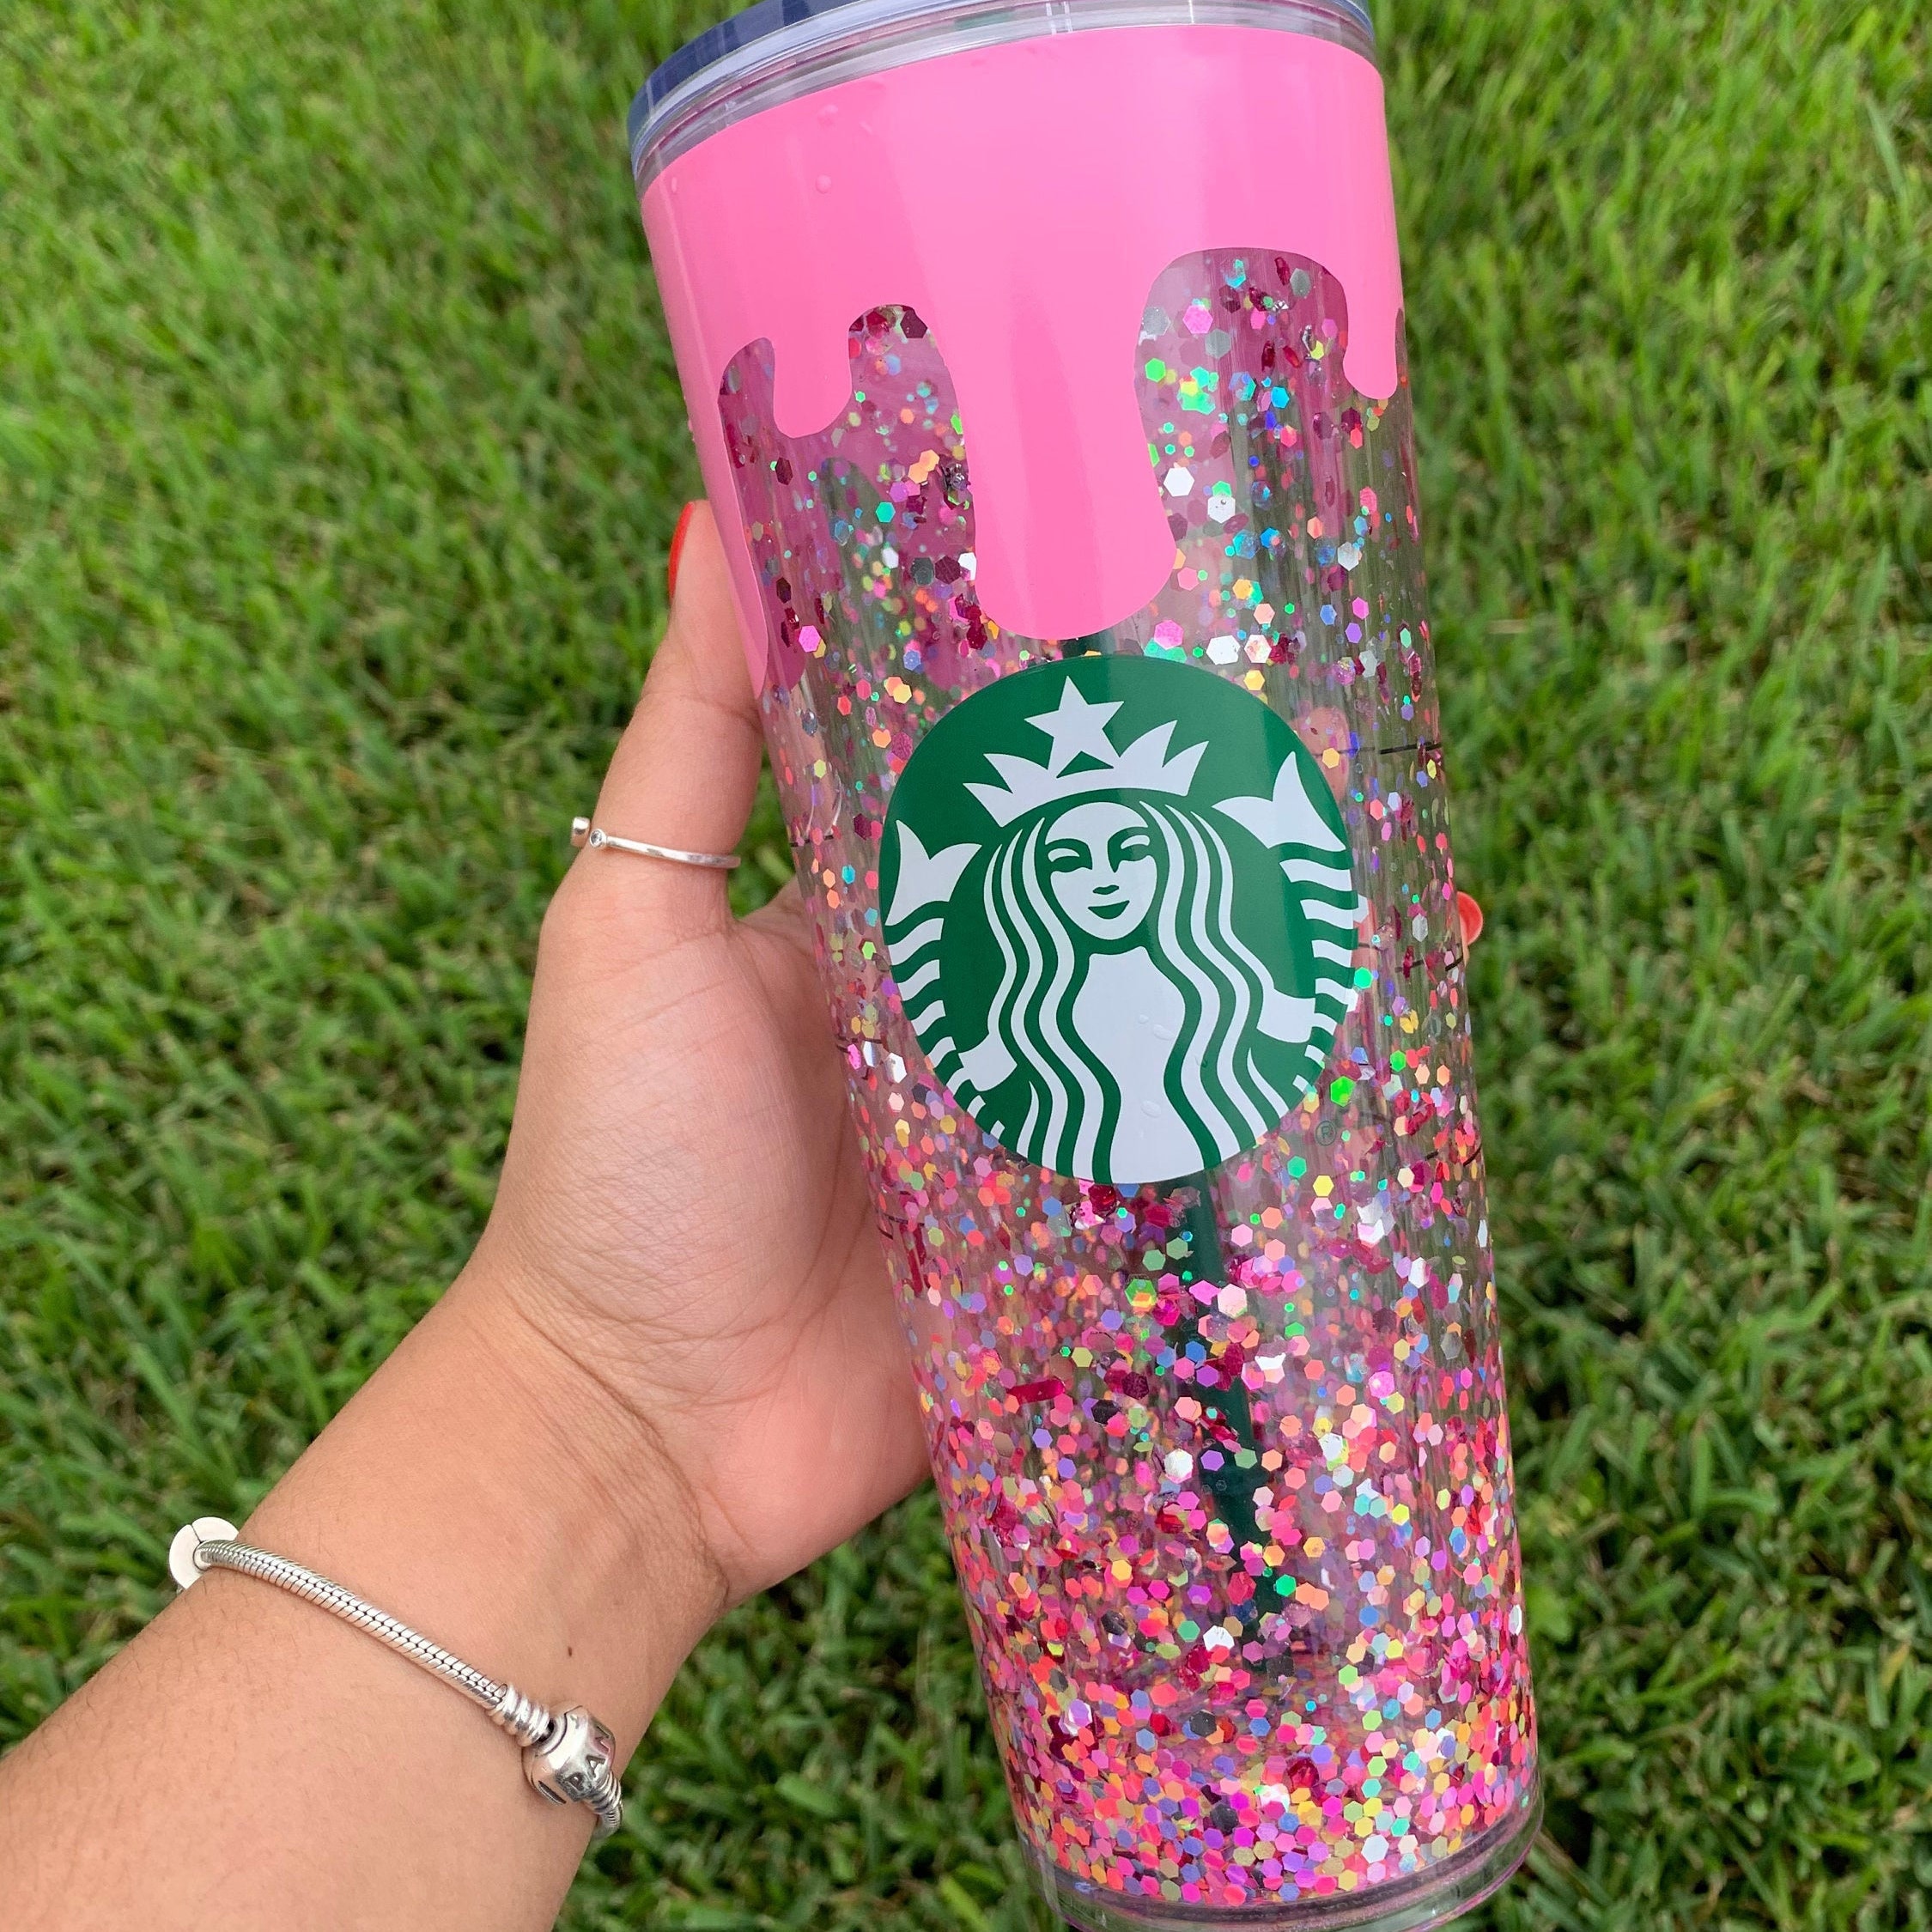 Starbucks Snow Globe Tumbler Venti Reusable Starbucks Cup Gift For Her Snow Globe Cup Powder Blue Glitter Starbucks Cup